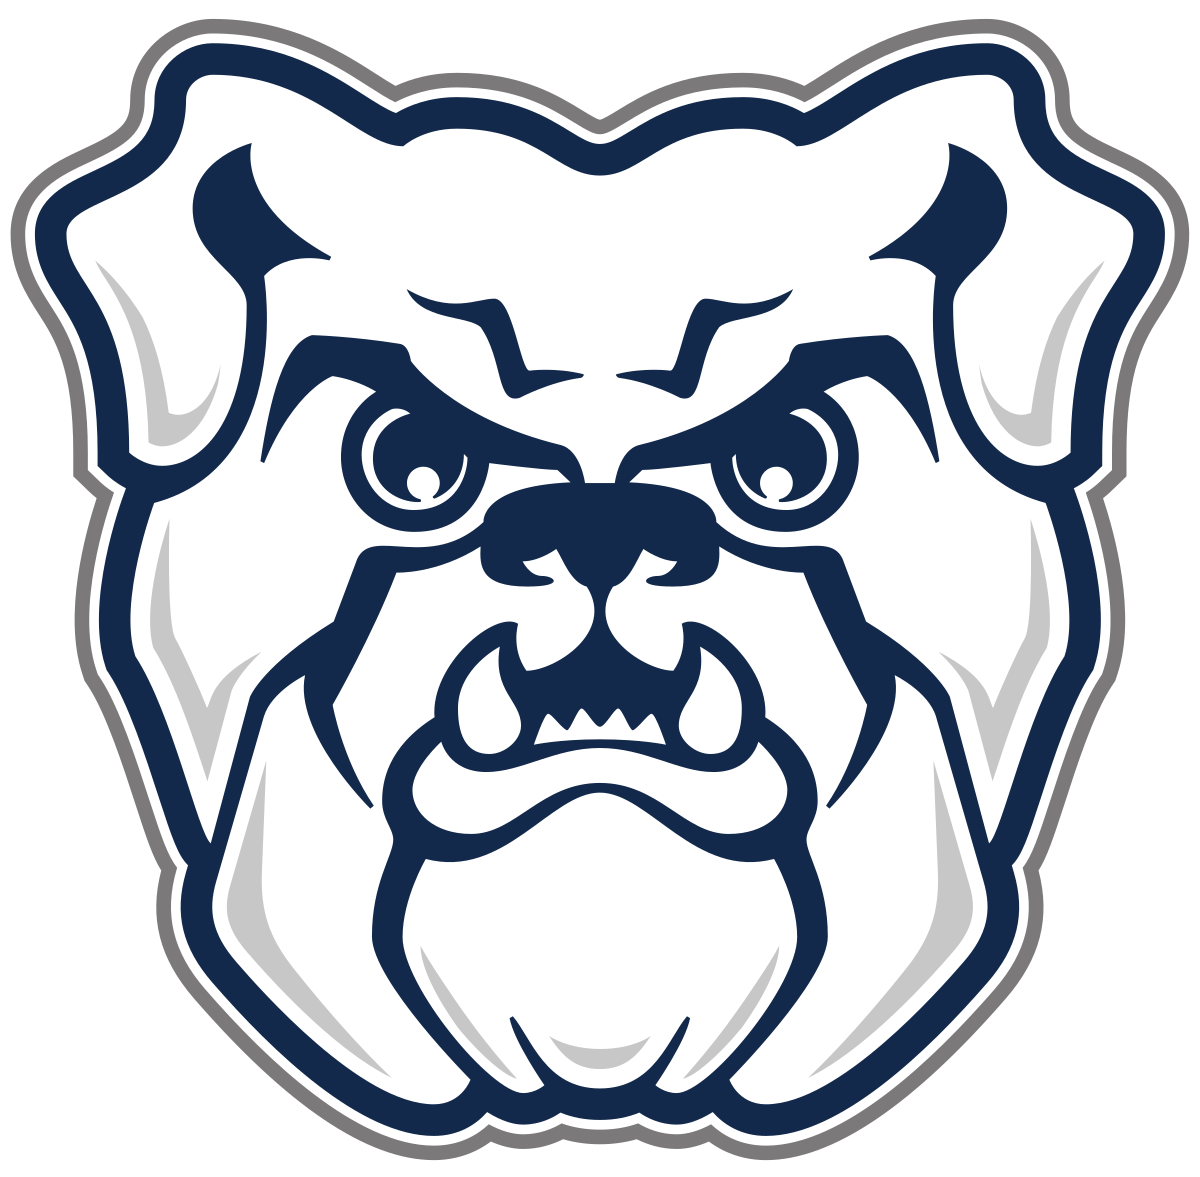 Butler Bulldogs - Wikipedia